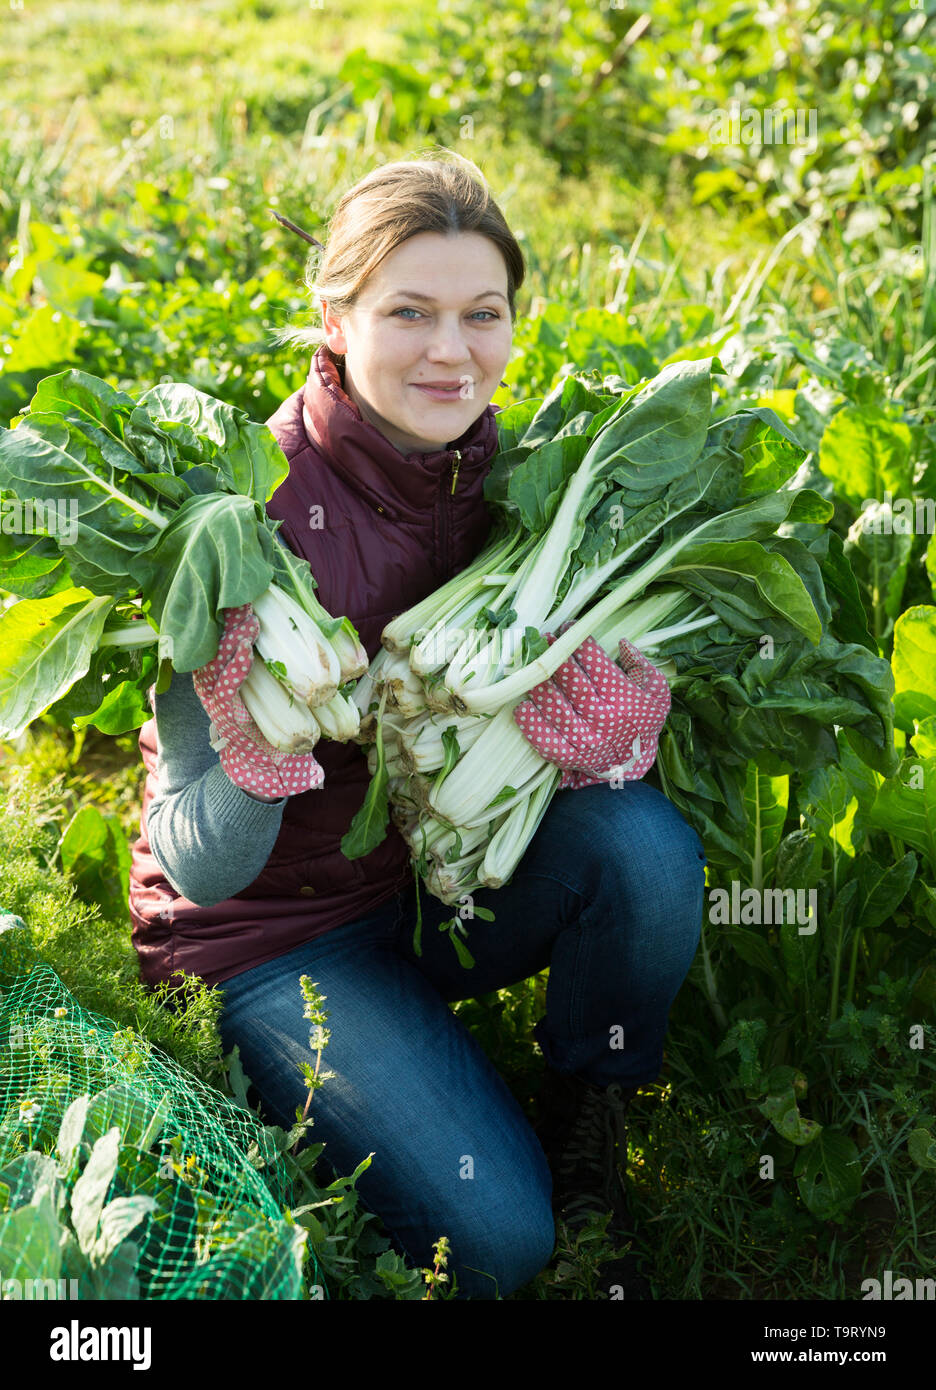 Cheerful woman farmer harvesting giant chard in plantation Stock Photo